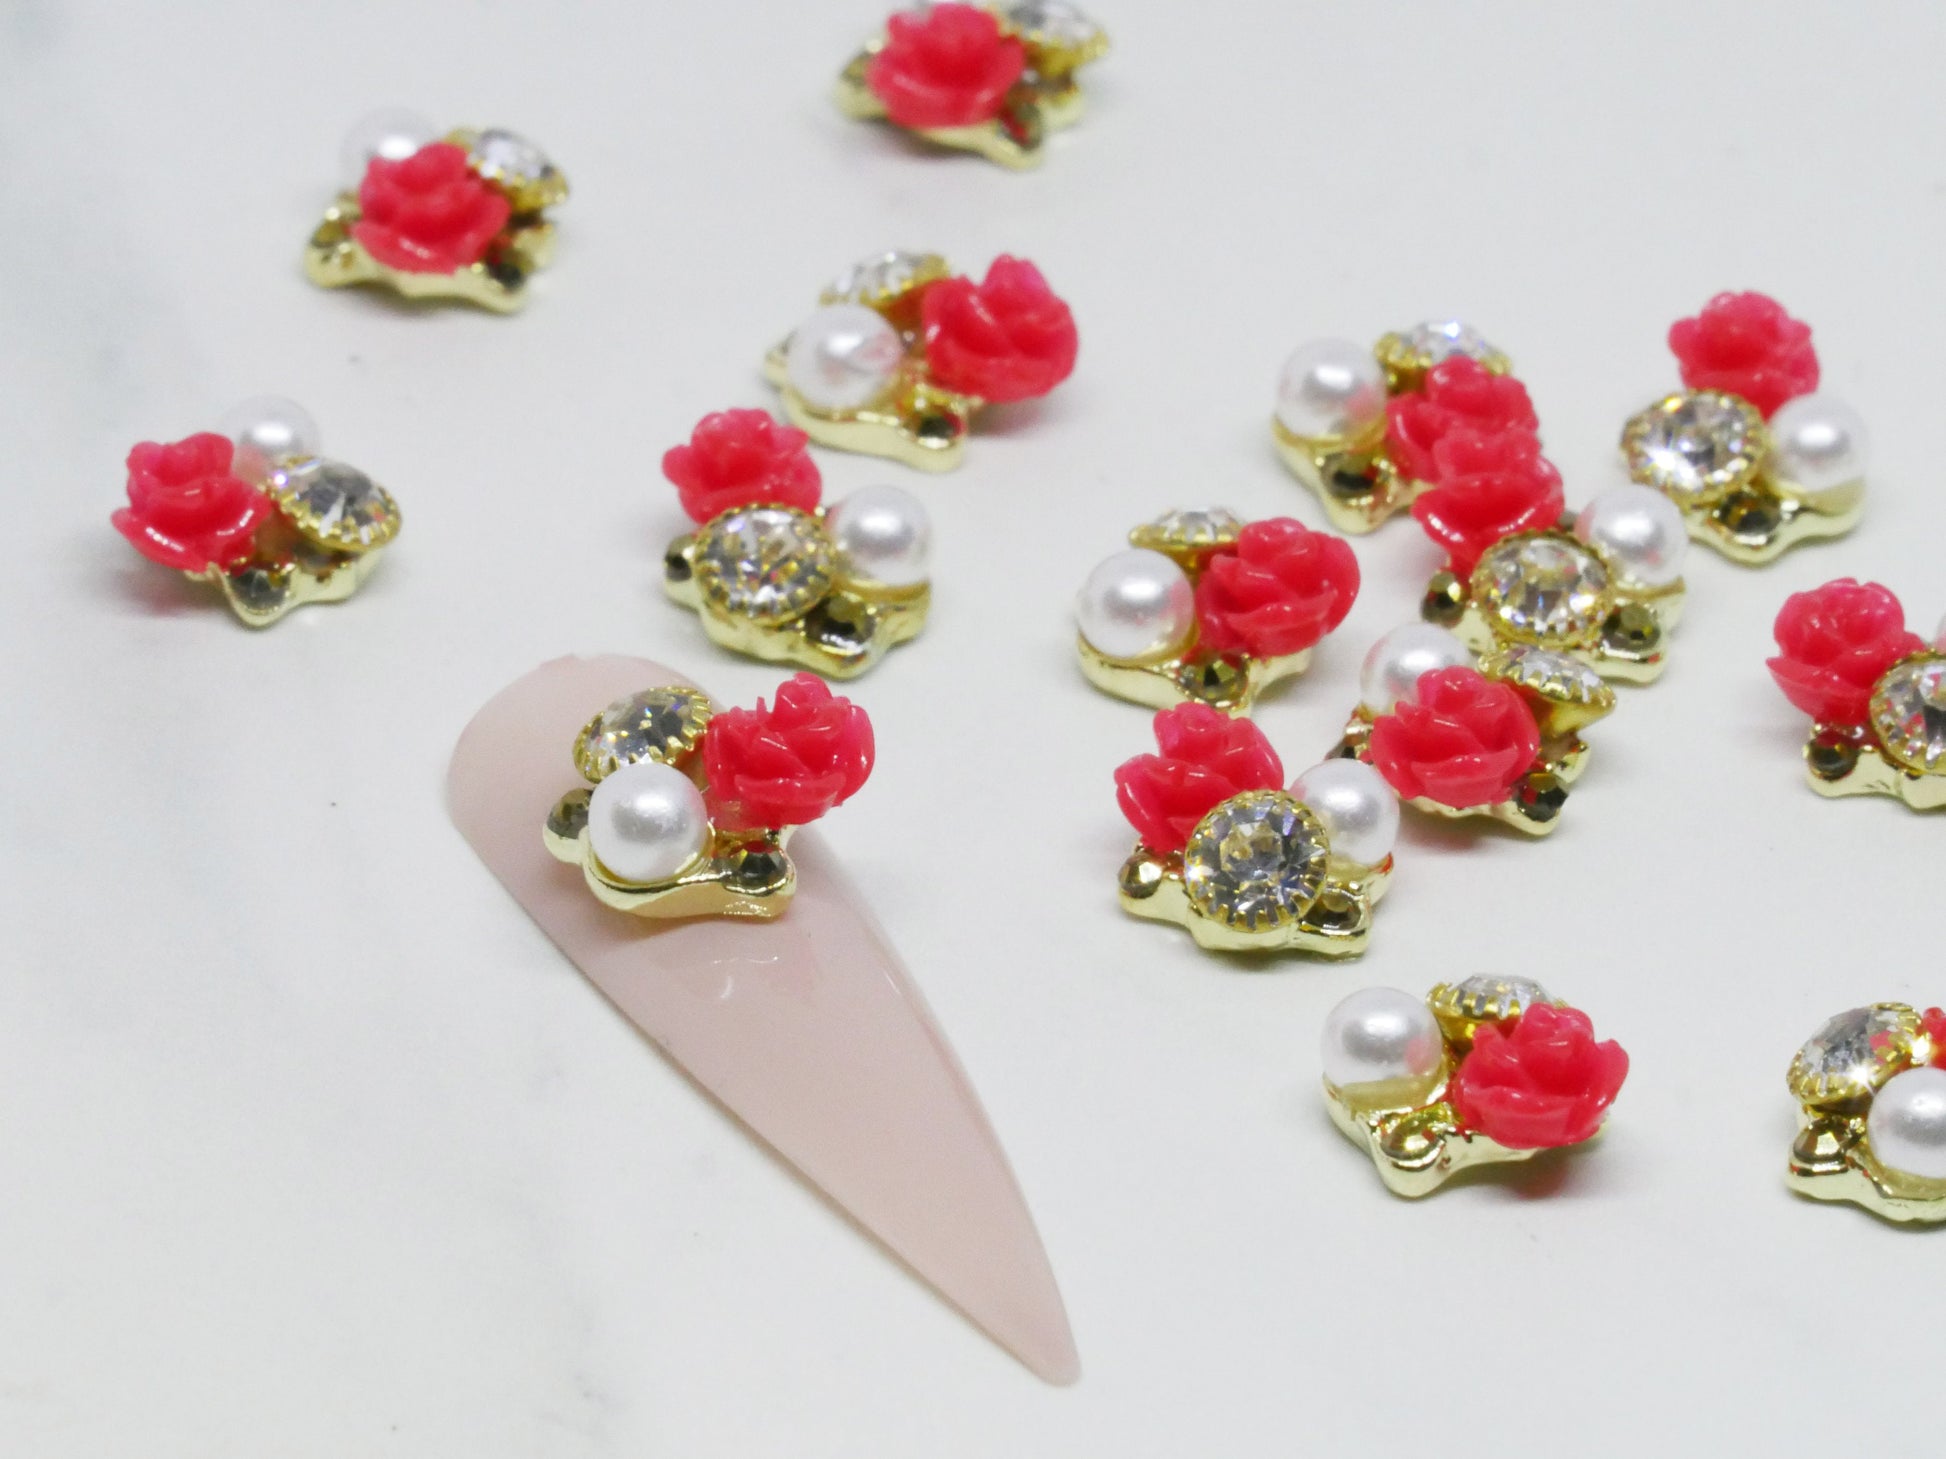 4 pcs Rose flower Nail Jewelry /floral nail art charm